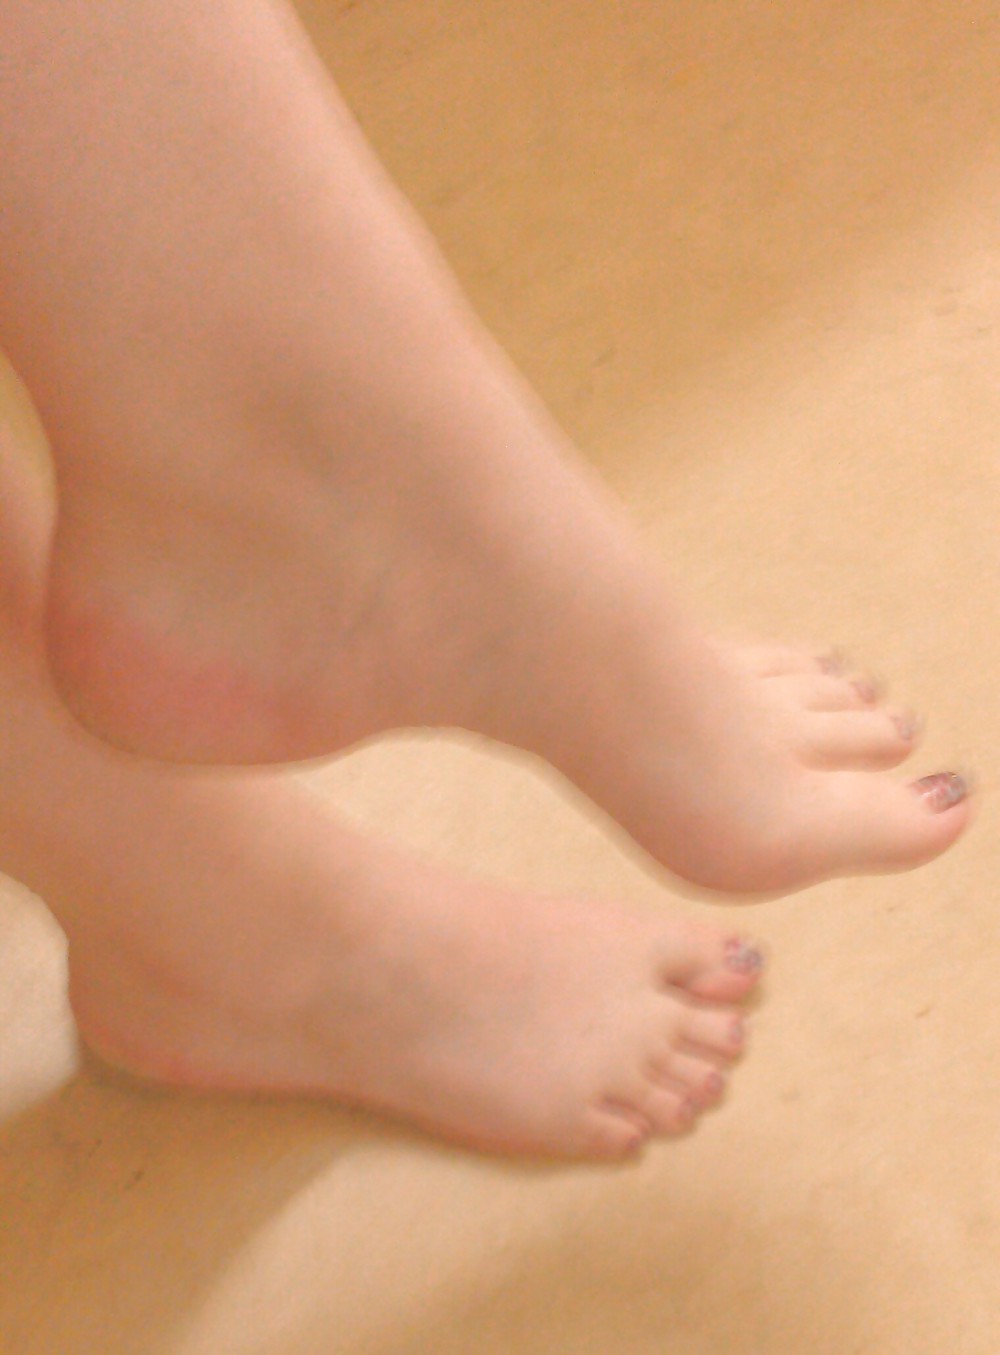 My fiancee's shiny feet. #9689405